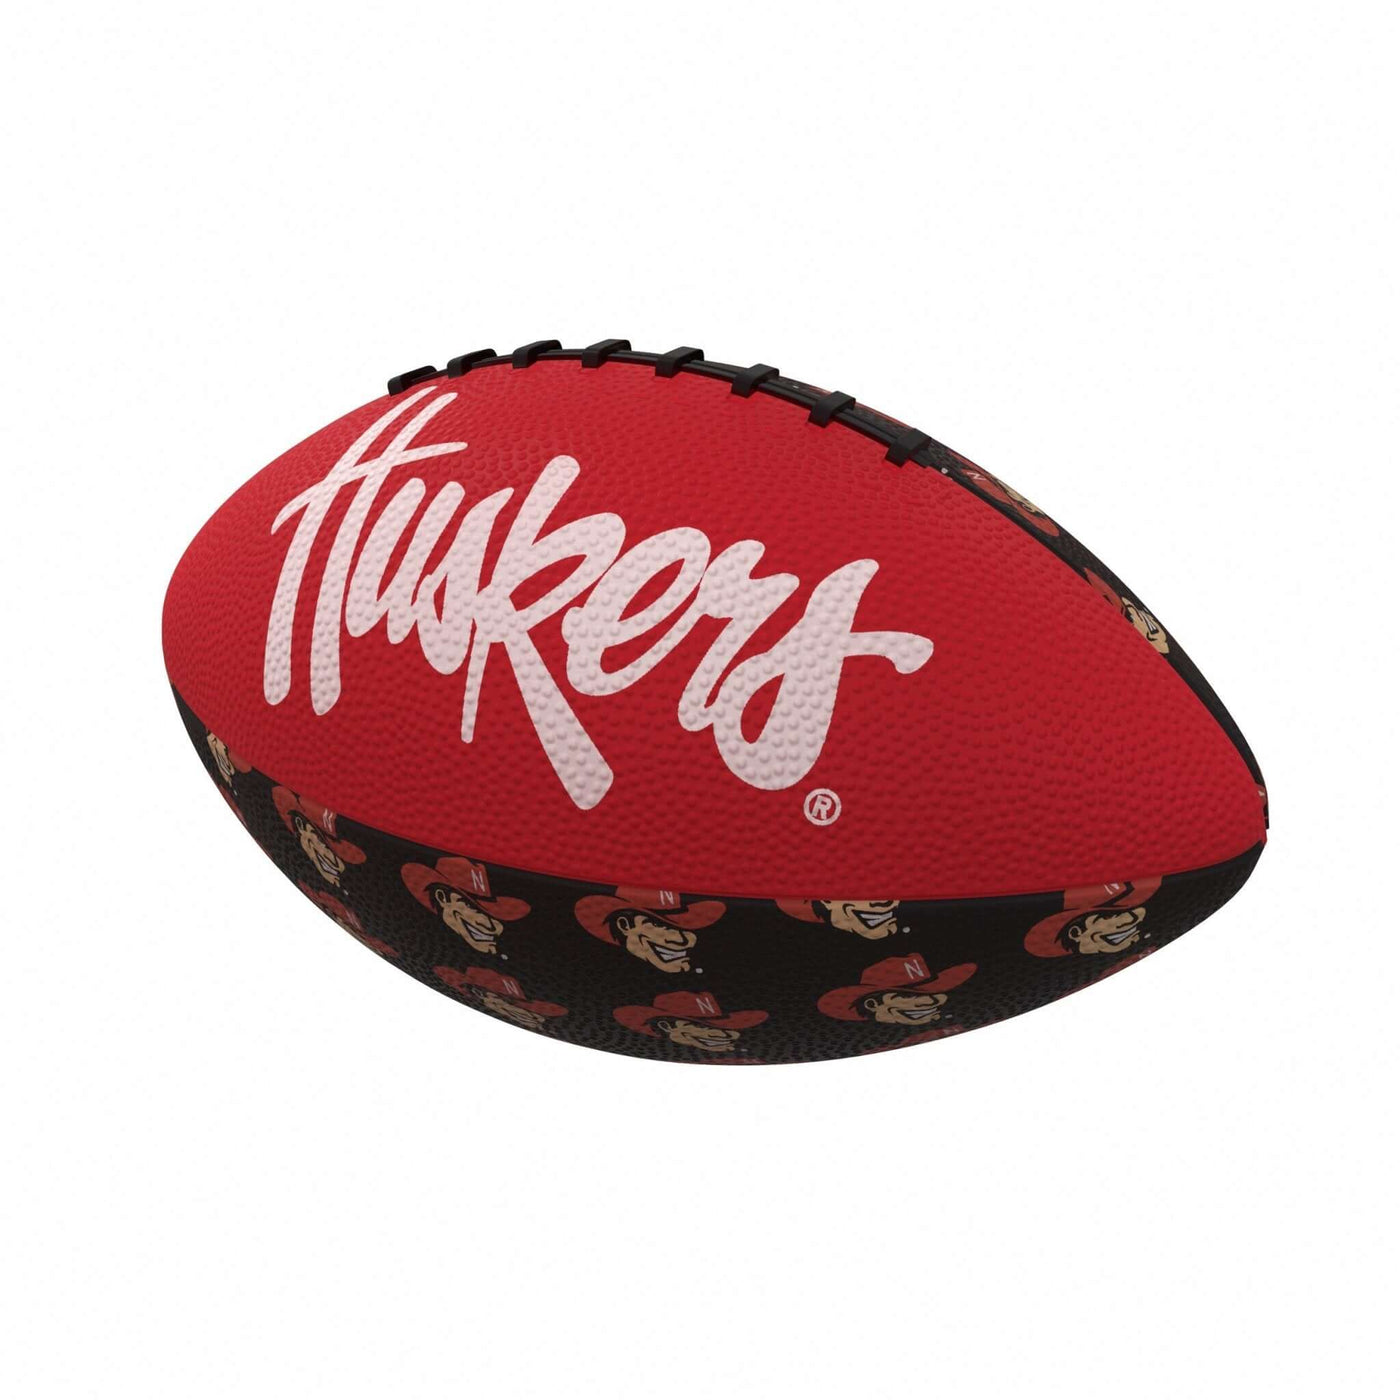 Nebraska Repeating Mini-Size Rubber Football - Logo Brands